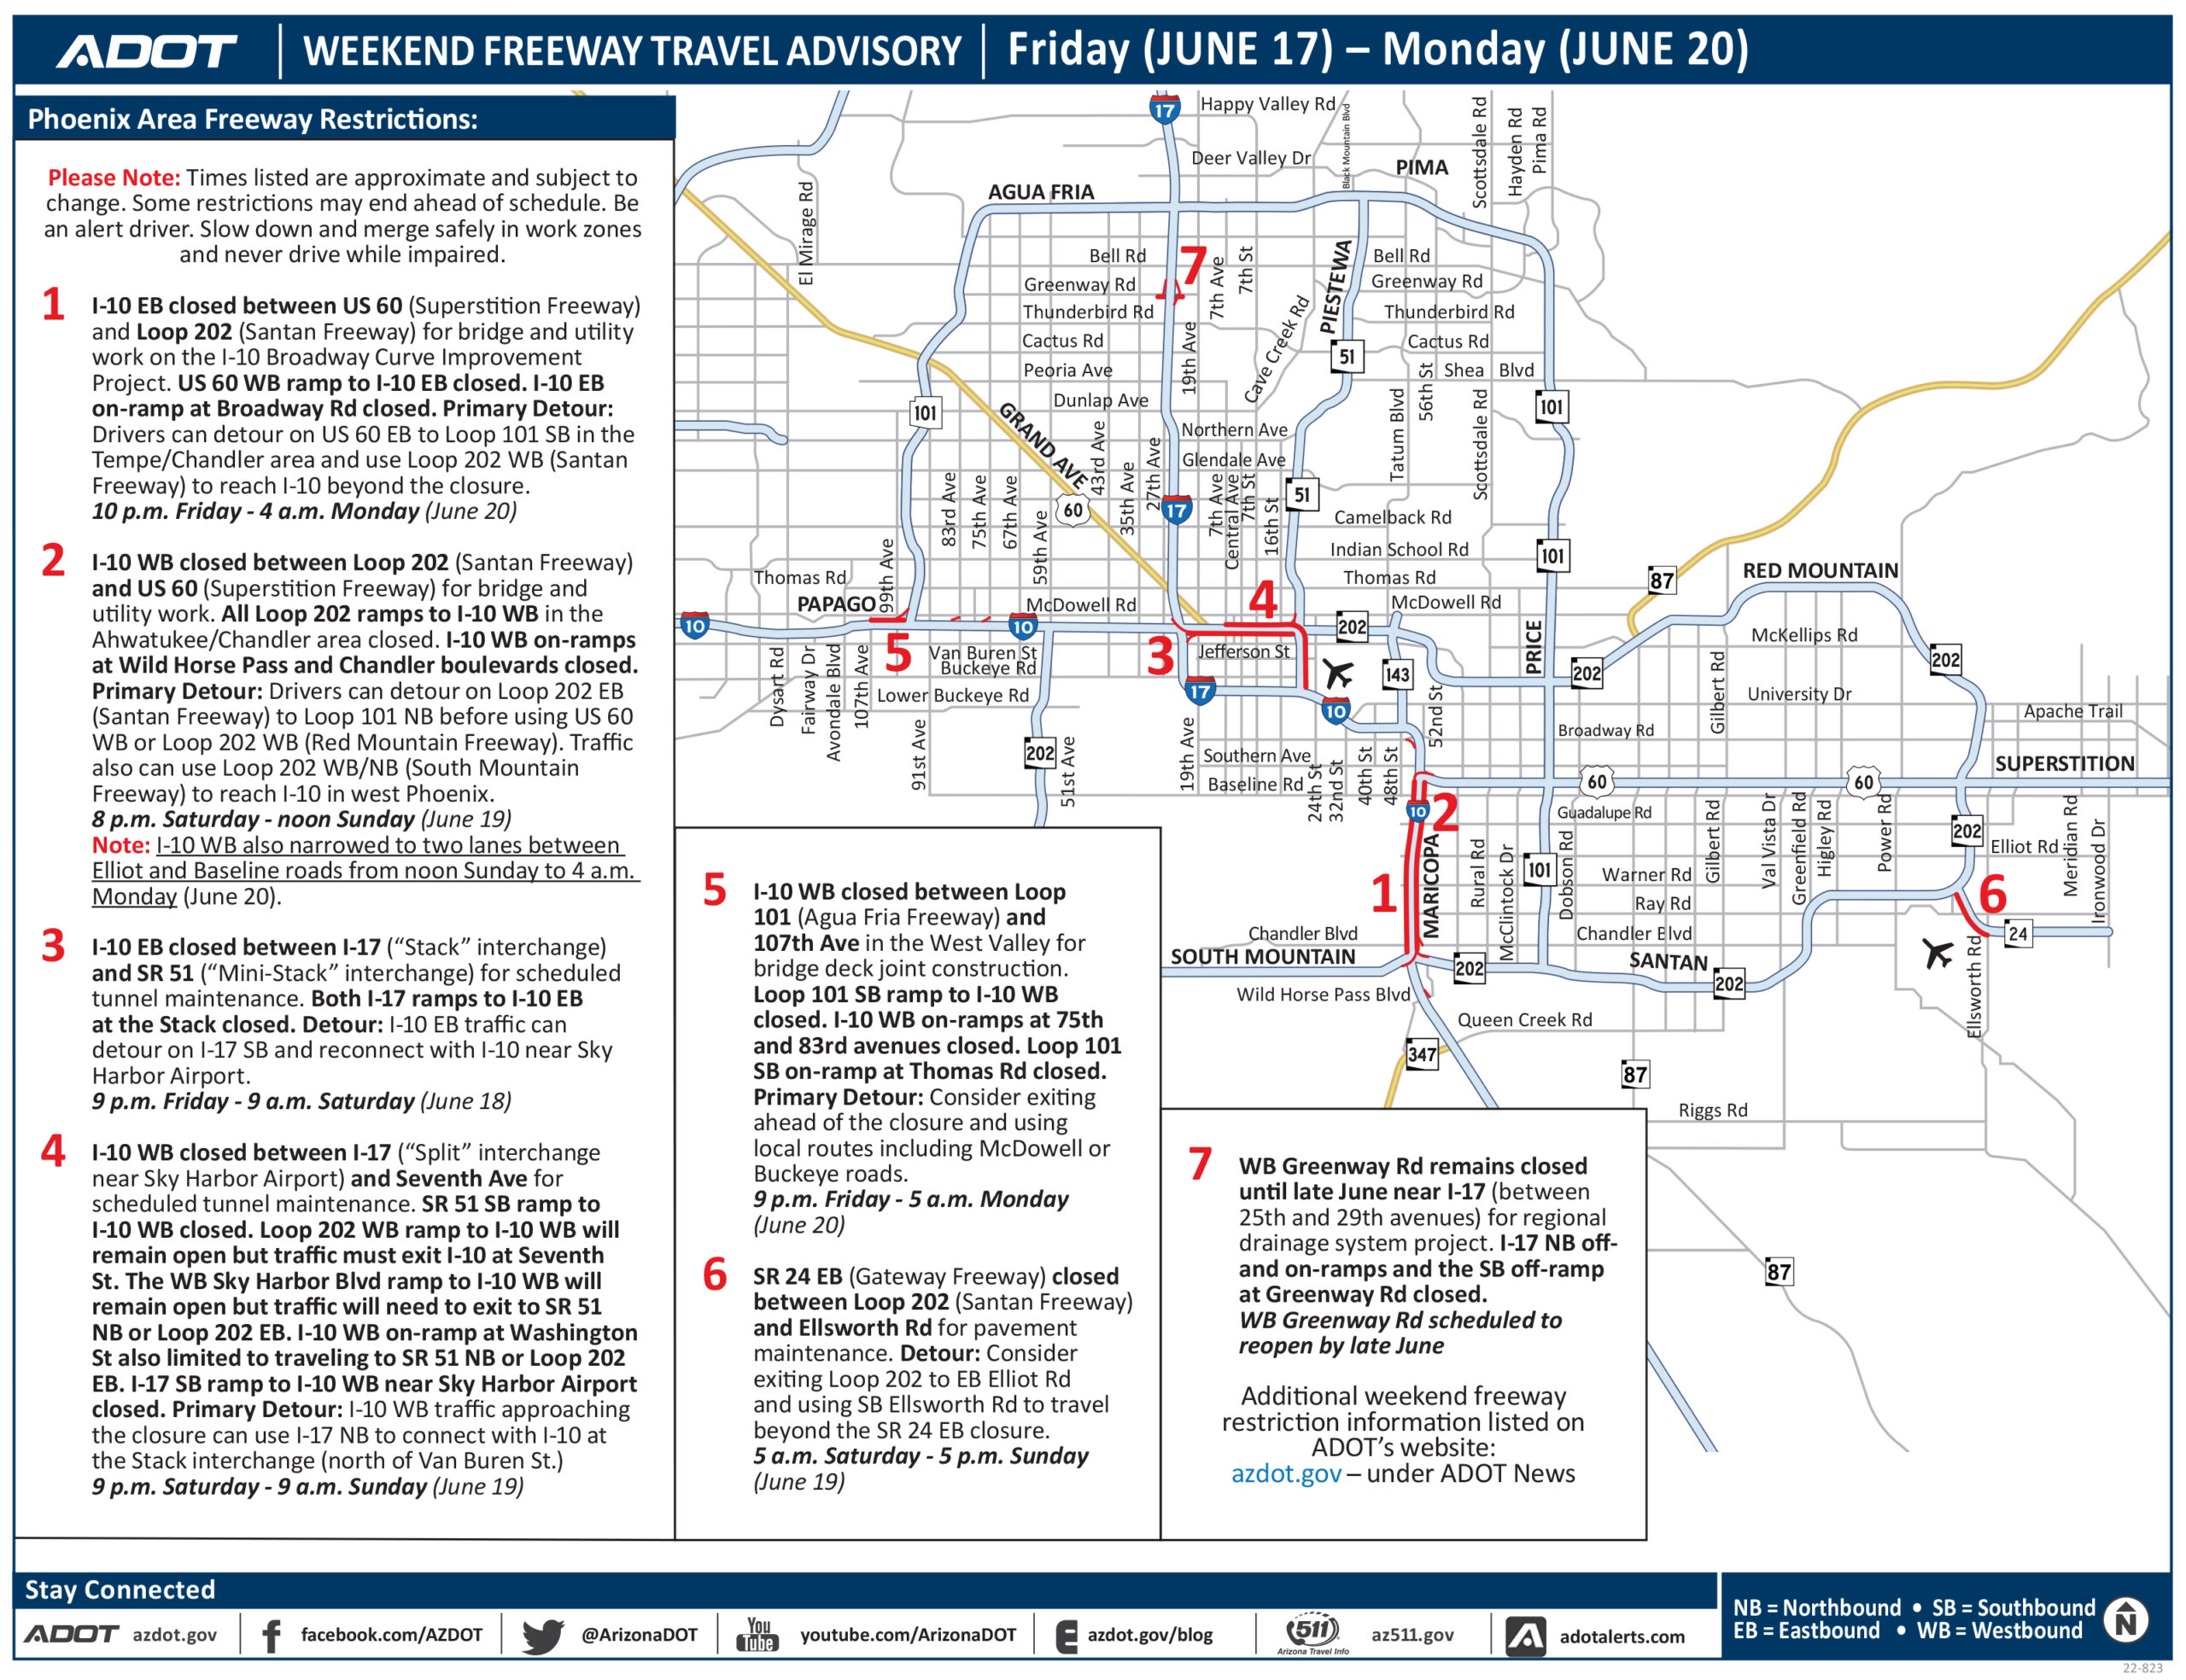 Phoenix area weekend freeway closures include multiple areas of I-10